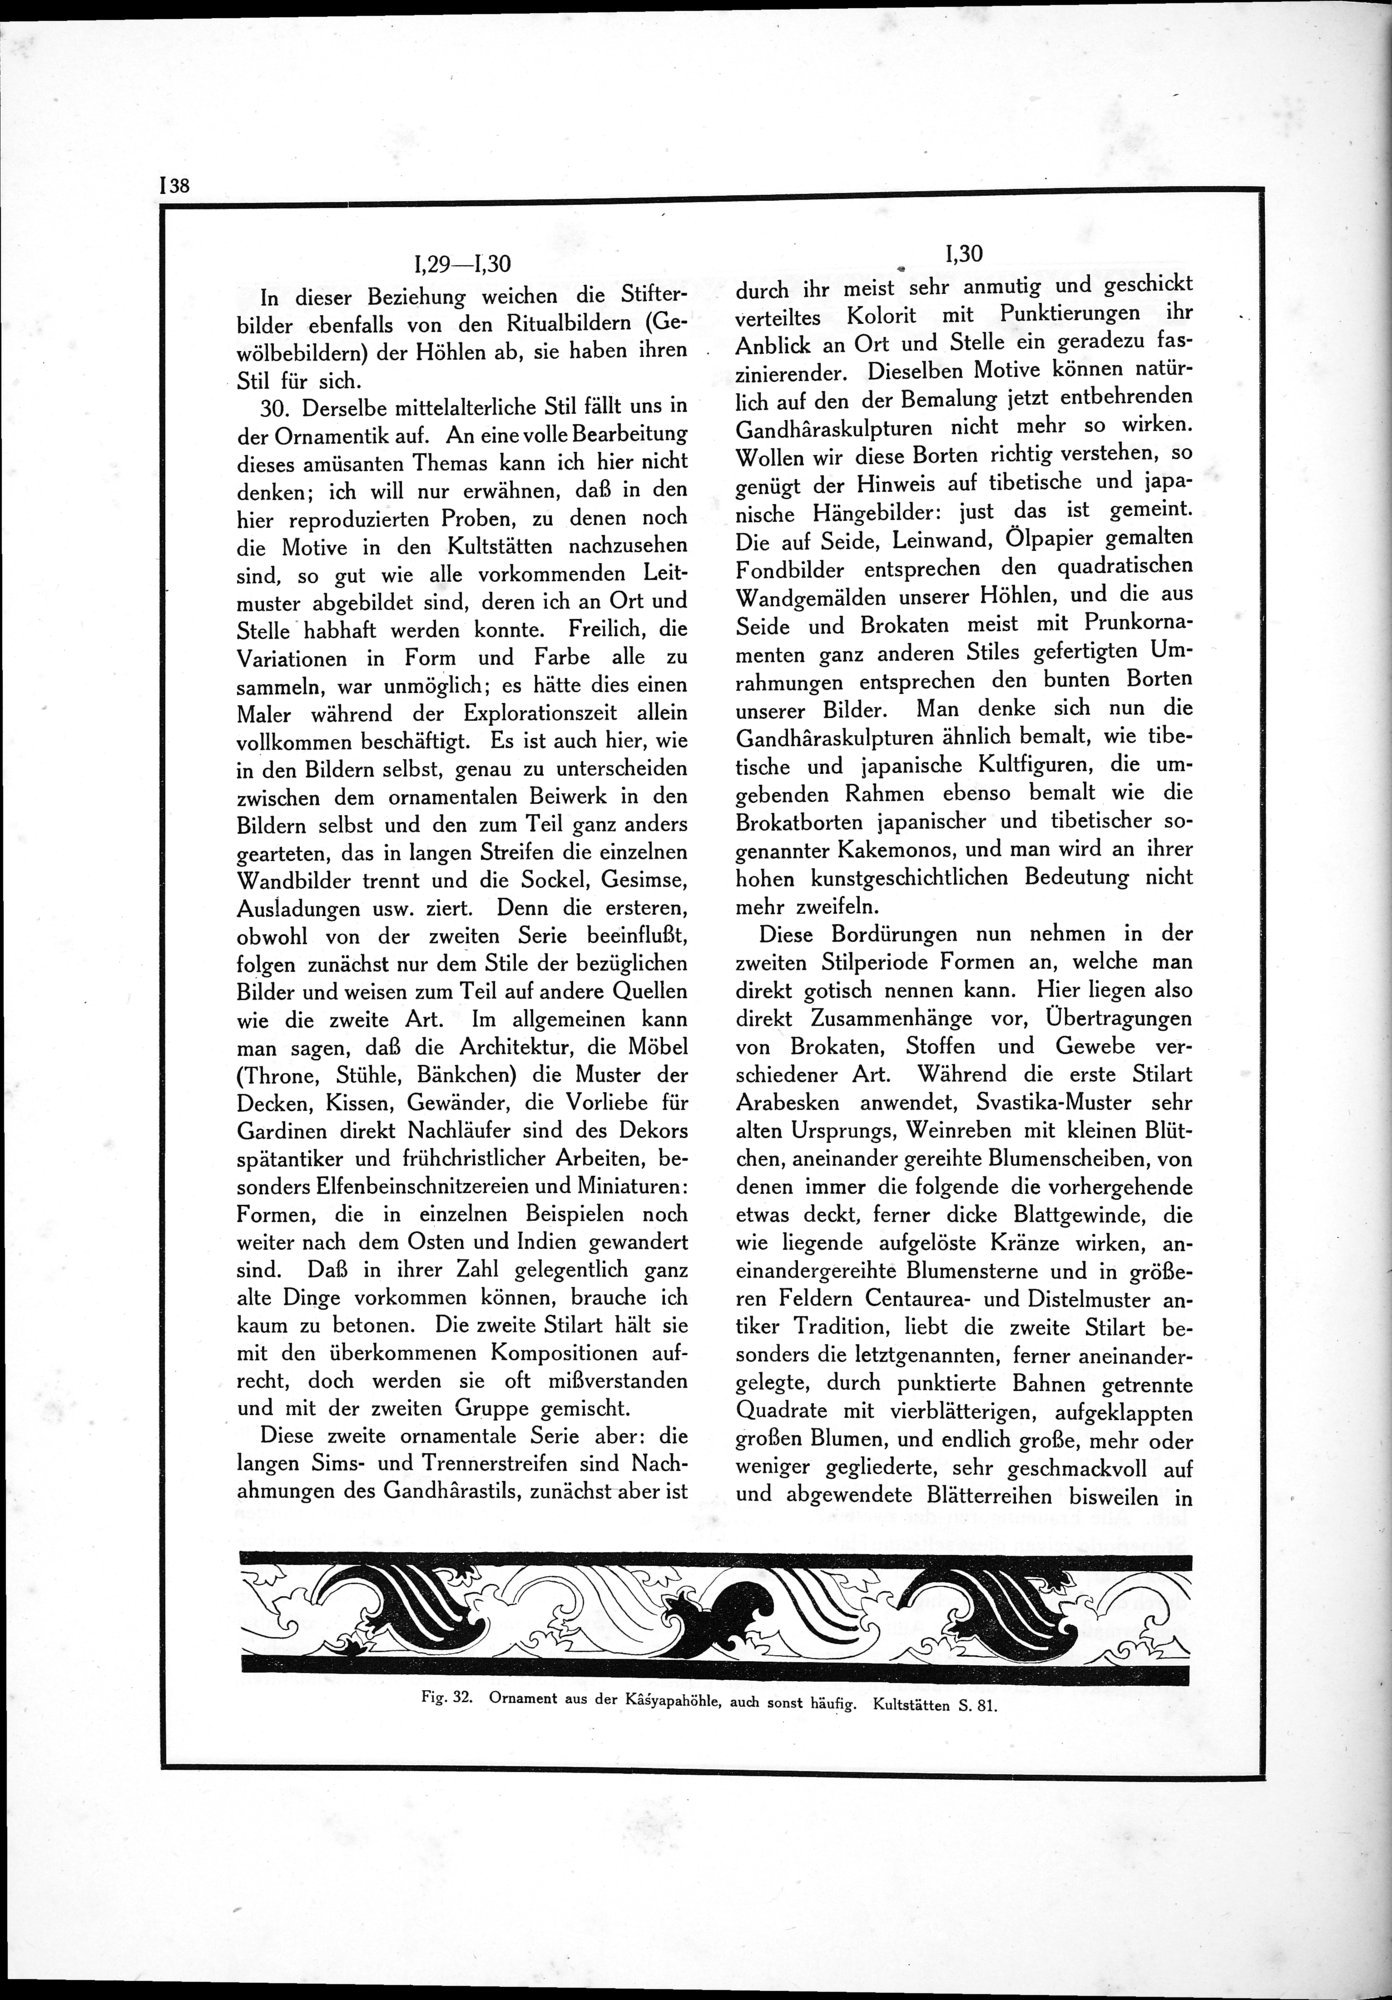 Alt-Kutscha : vol.1 / Page 50 (Grayscale High Resolution Image)